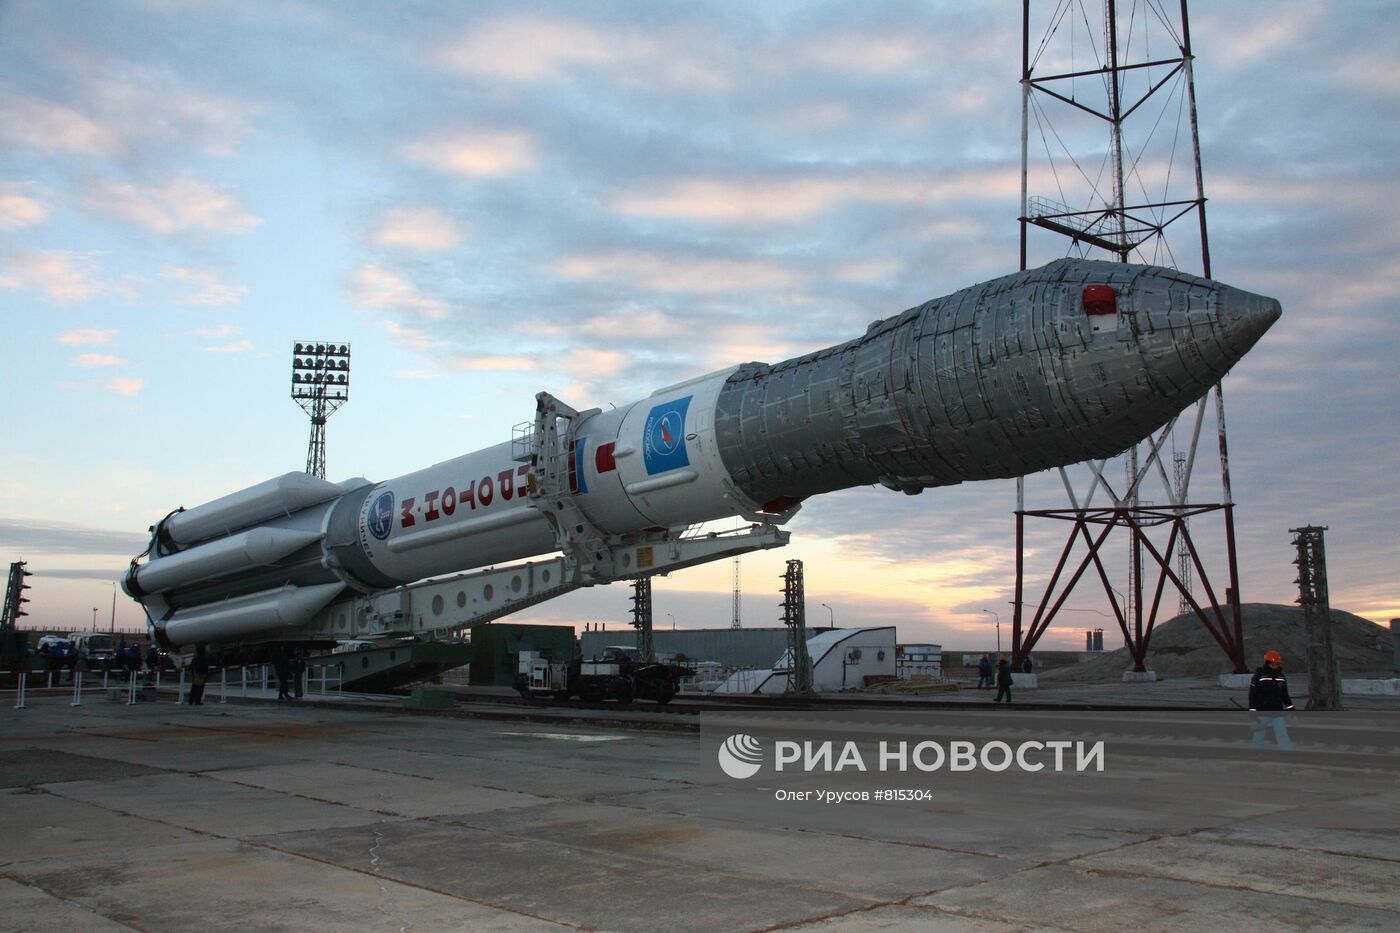 Ракета "Протон-М" установлена на старт космодрома "Байконур"